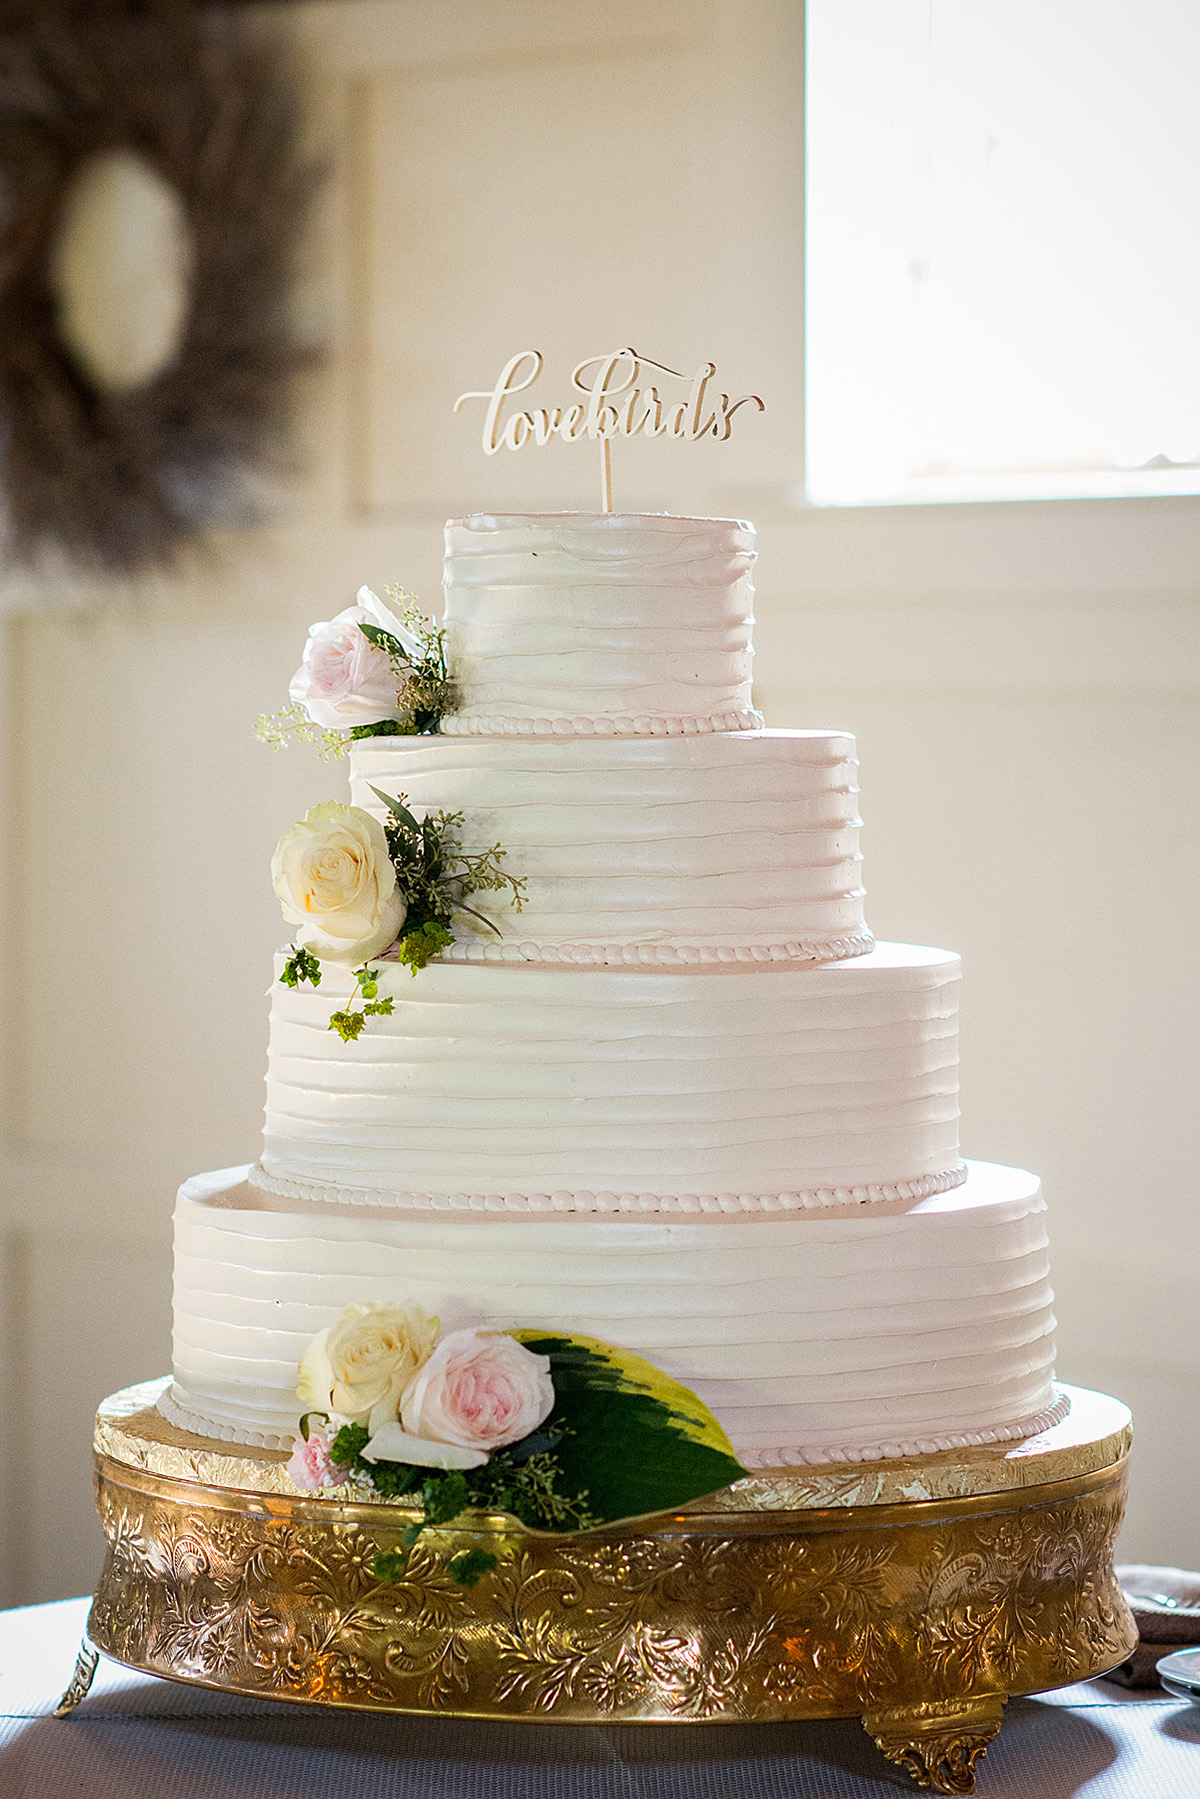 Tim and Kristen's wedding cake